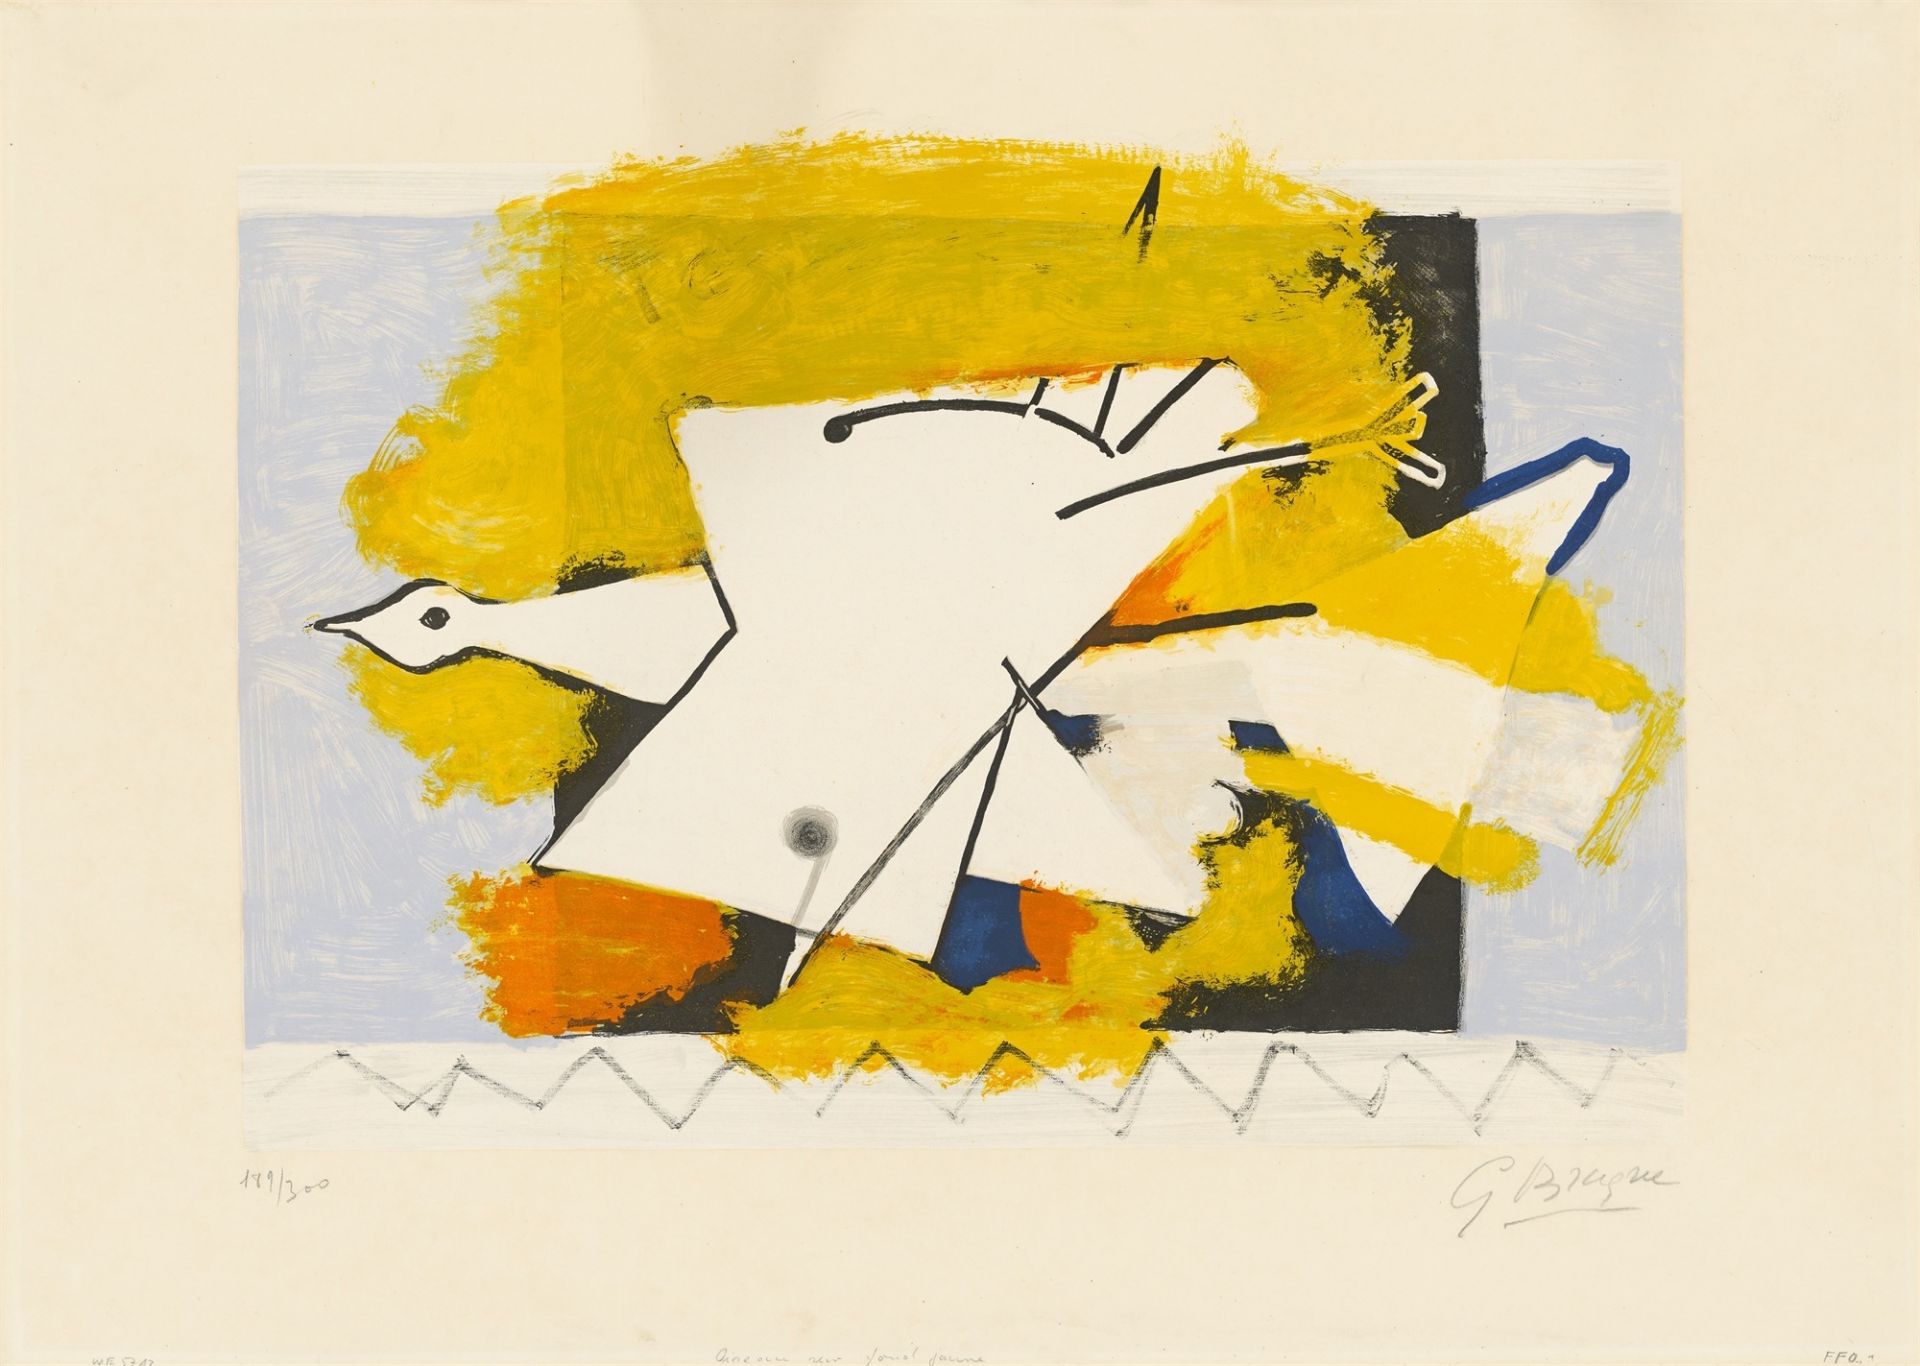 Georges Braque. ”L'oiseau jaune”. 1959